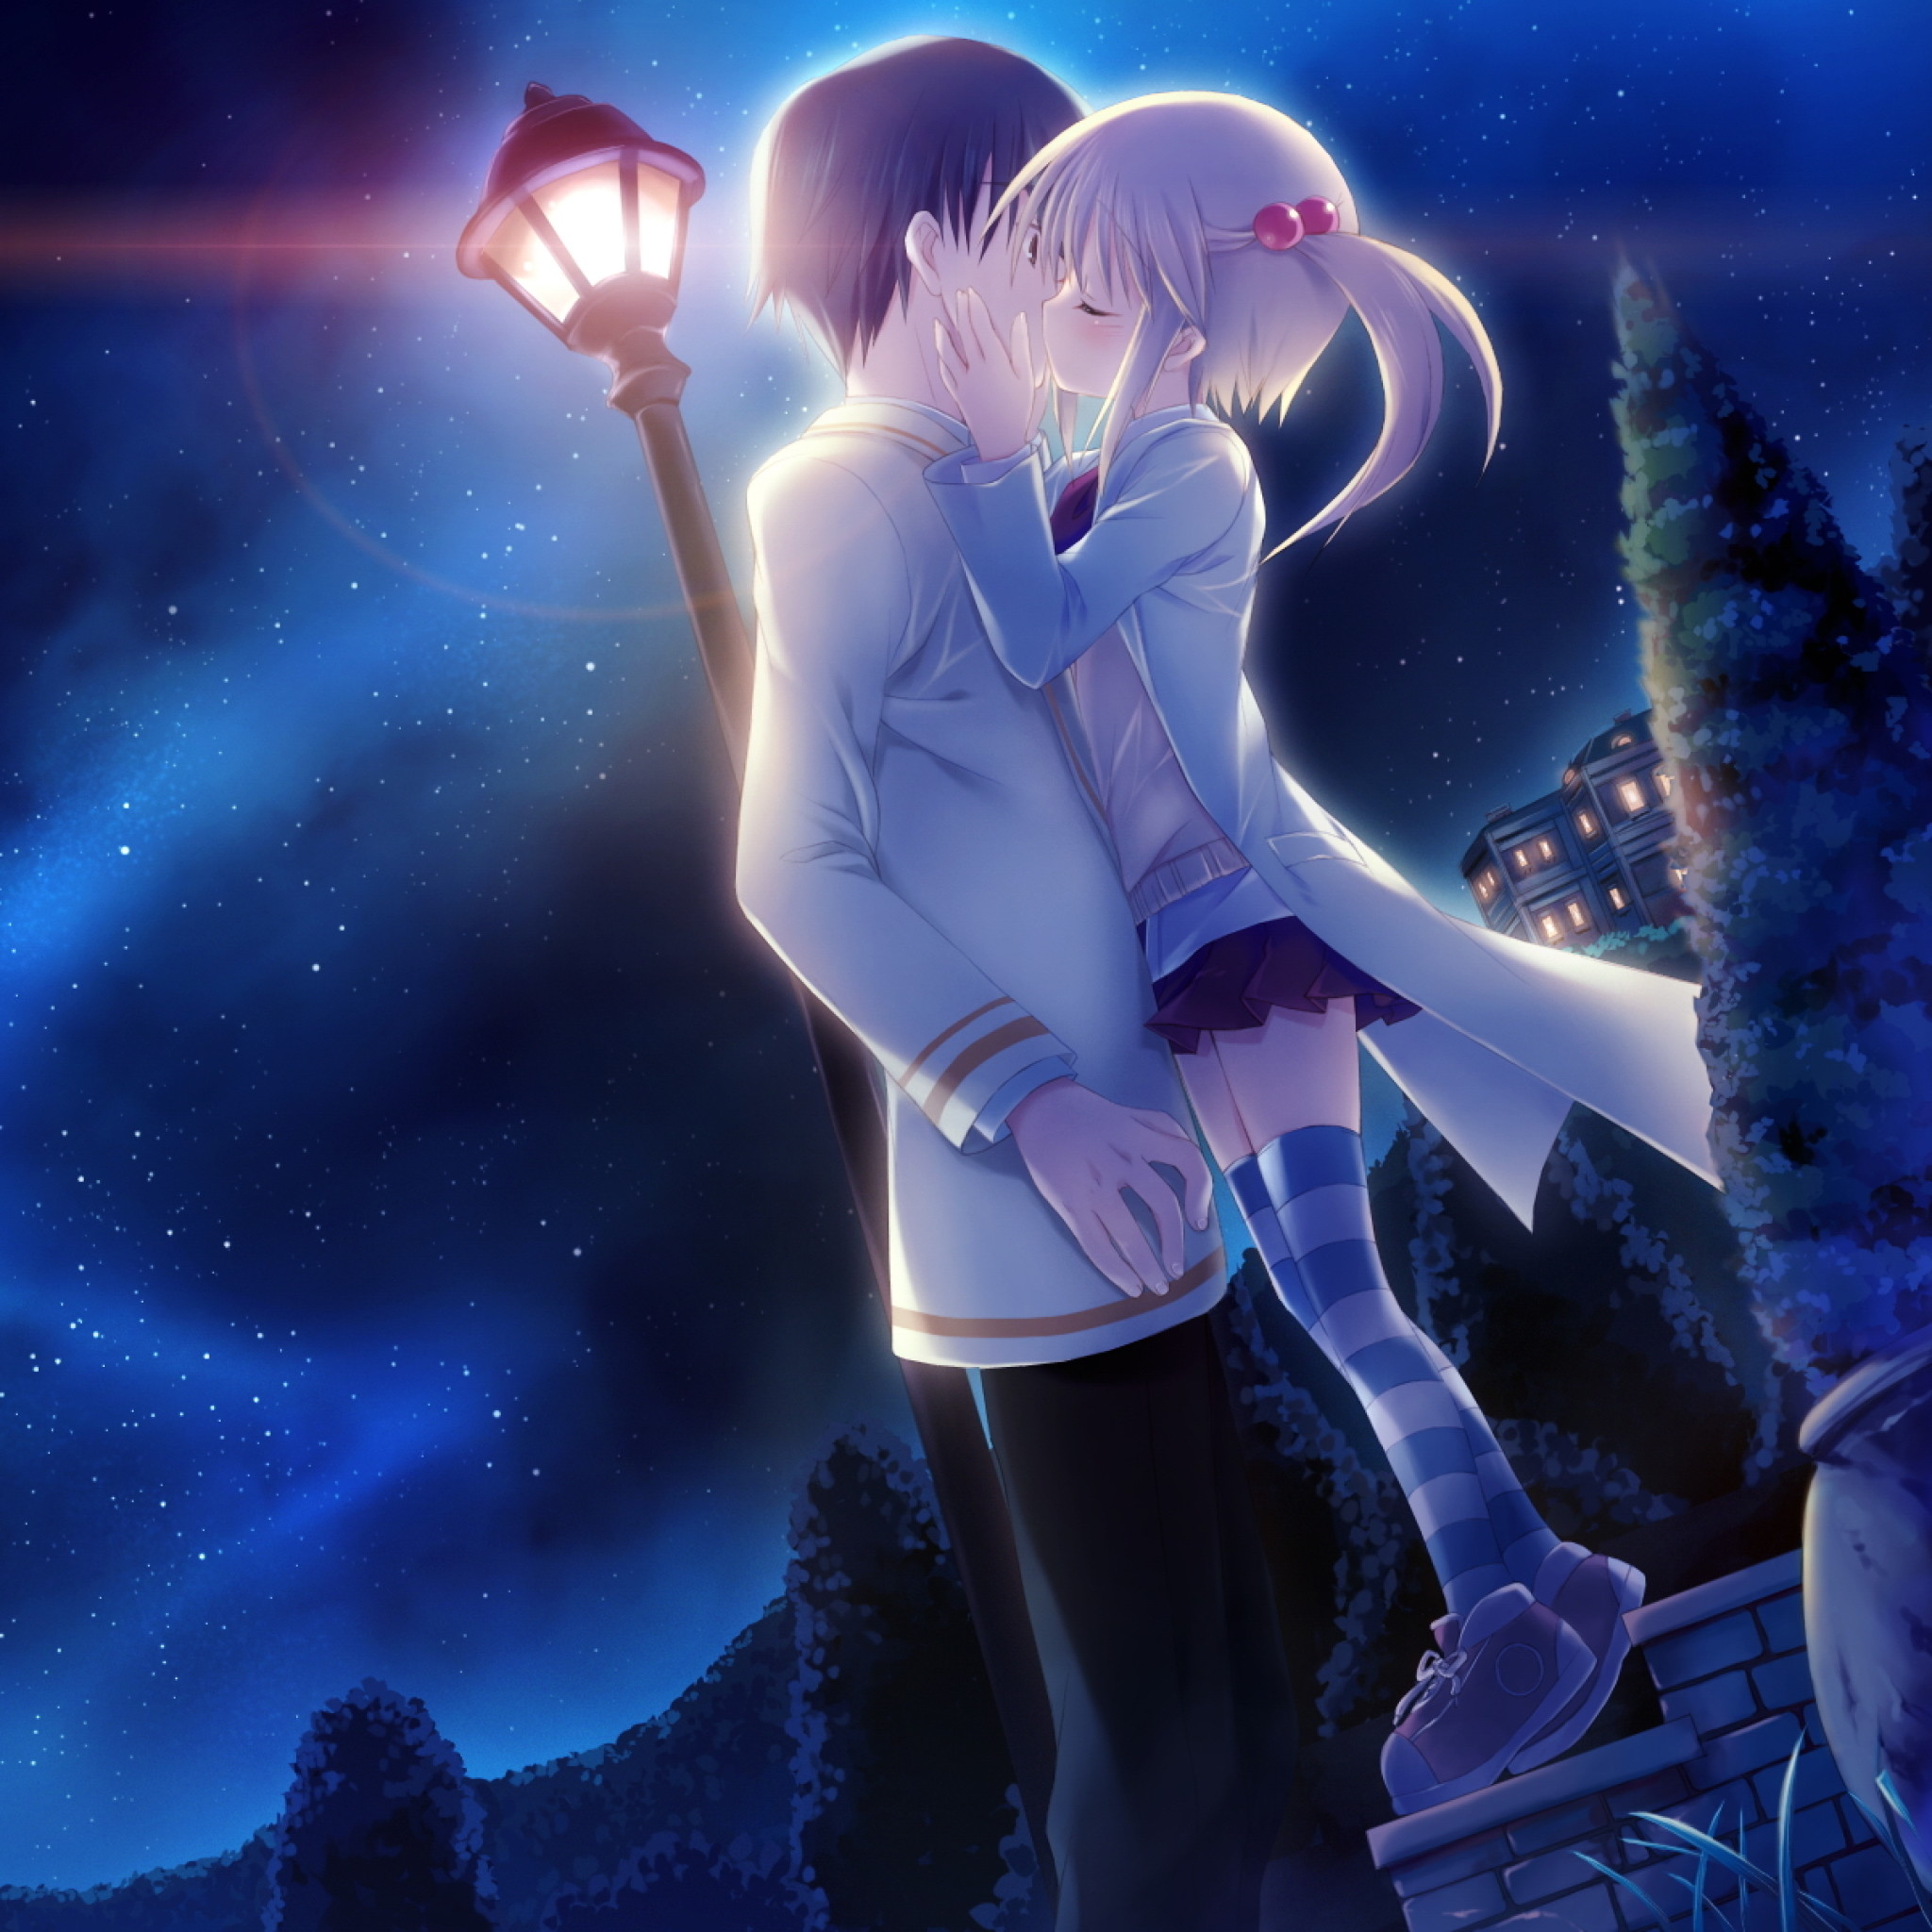 tapete nachtliebe,licht,himmel,anime,romantik,interaktion